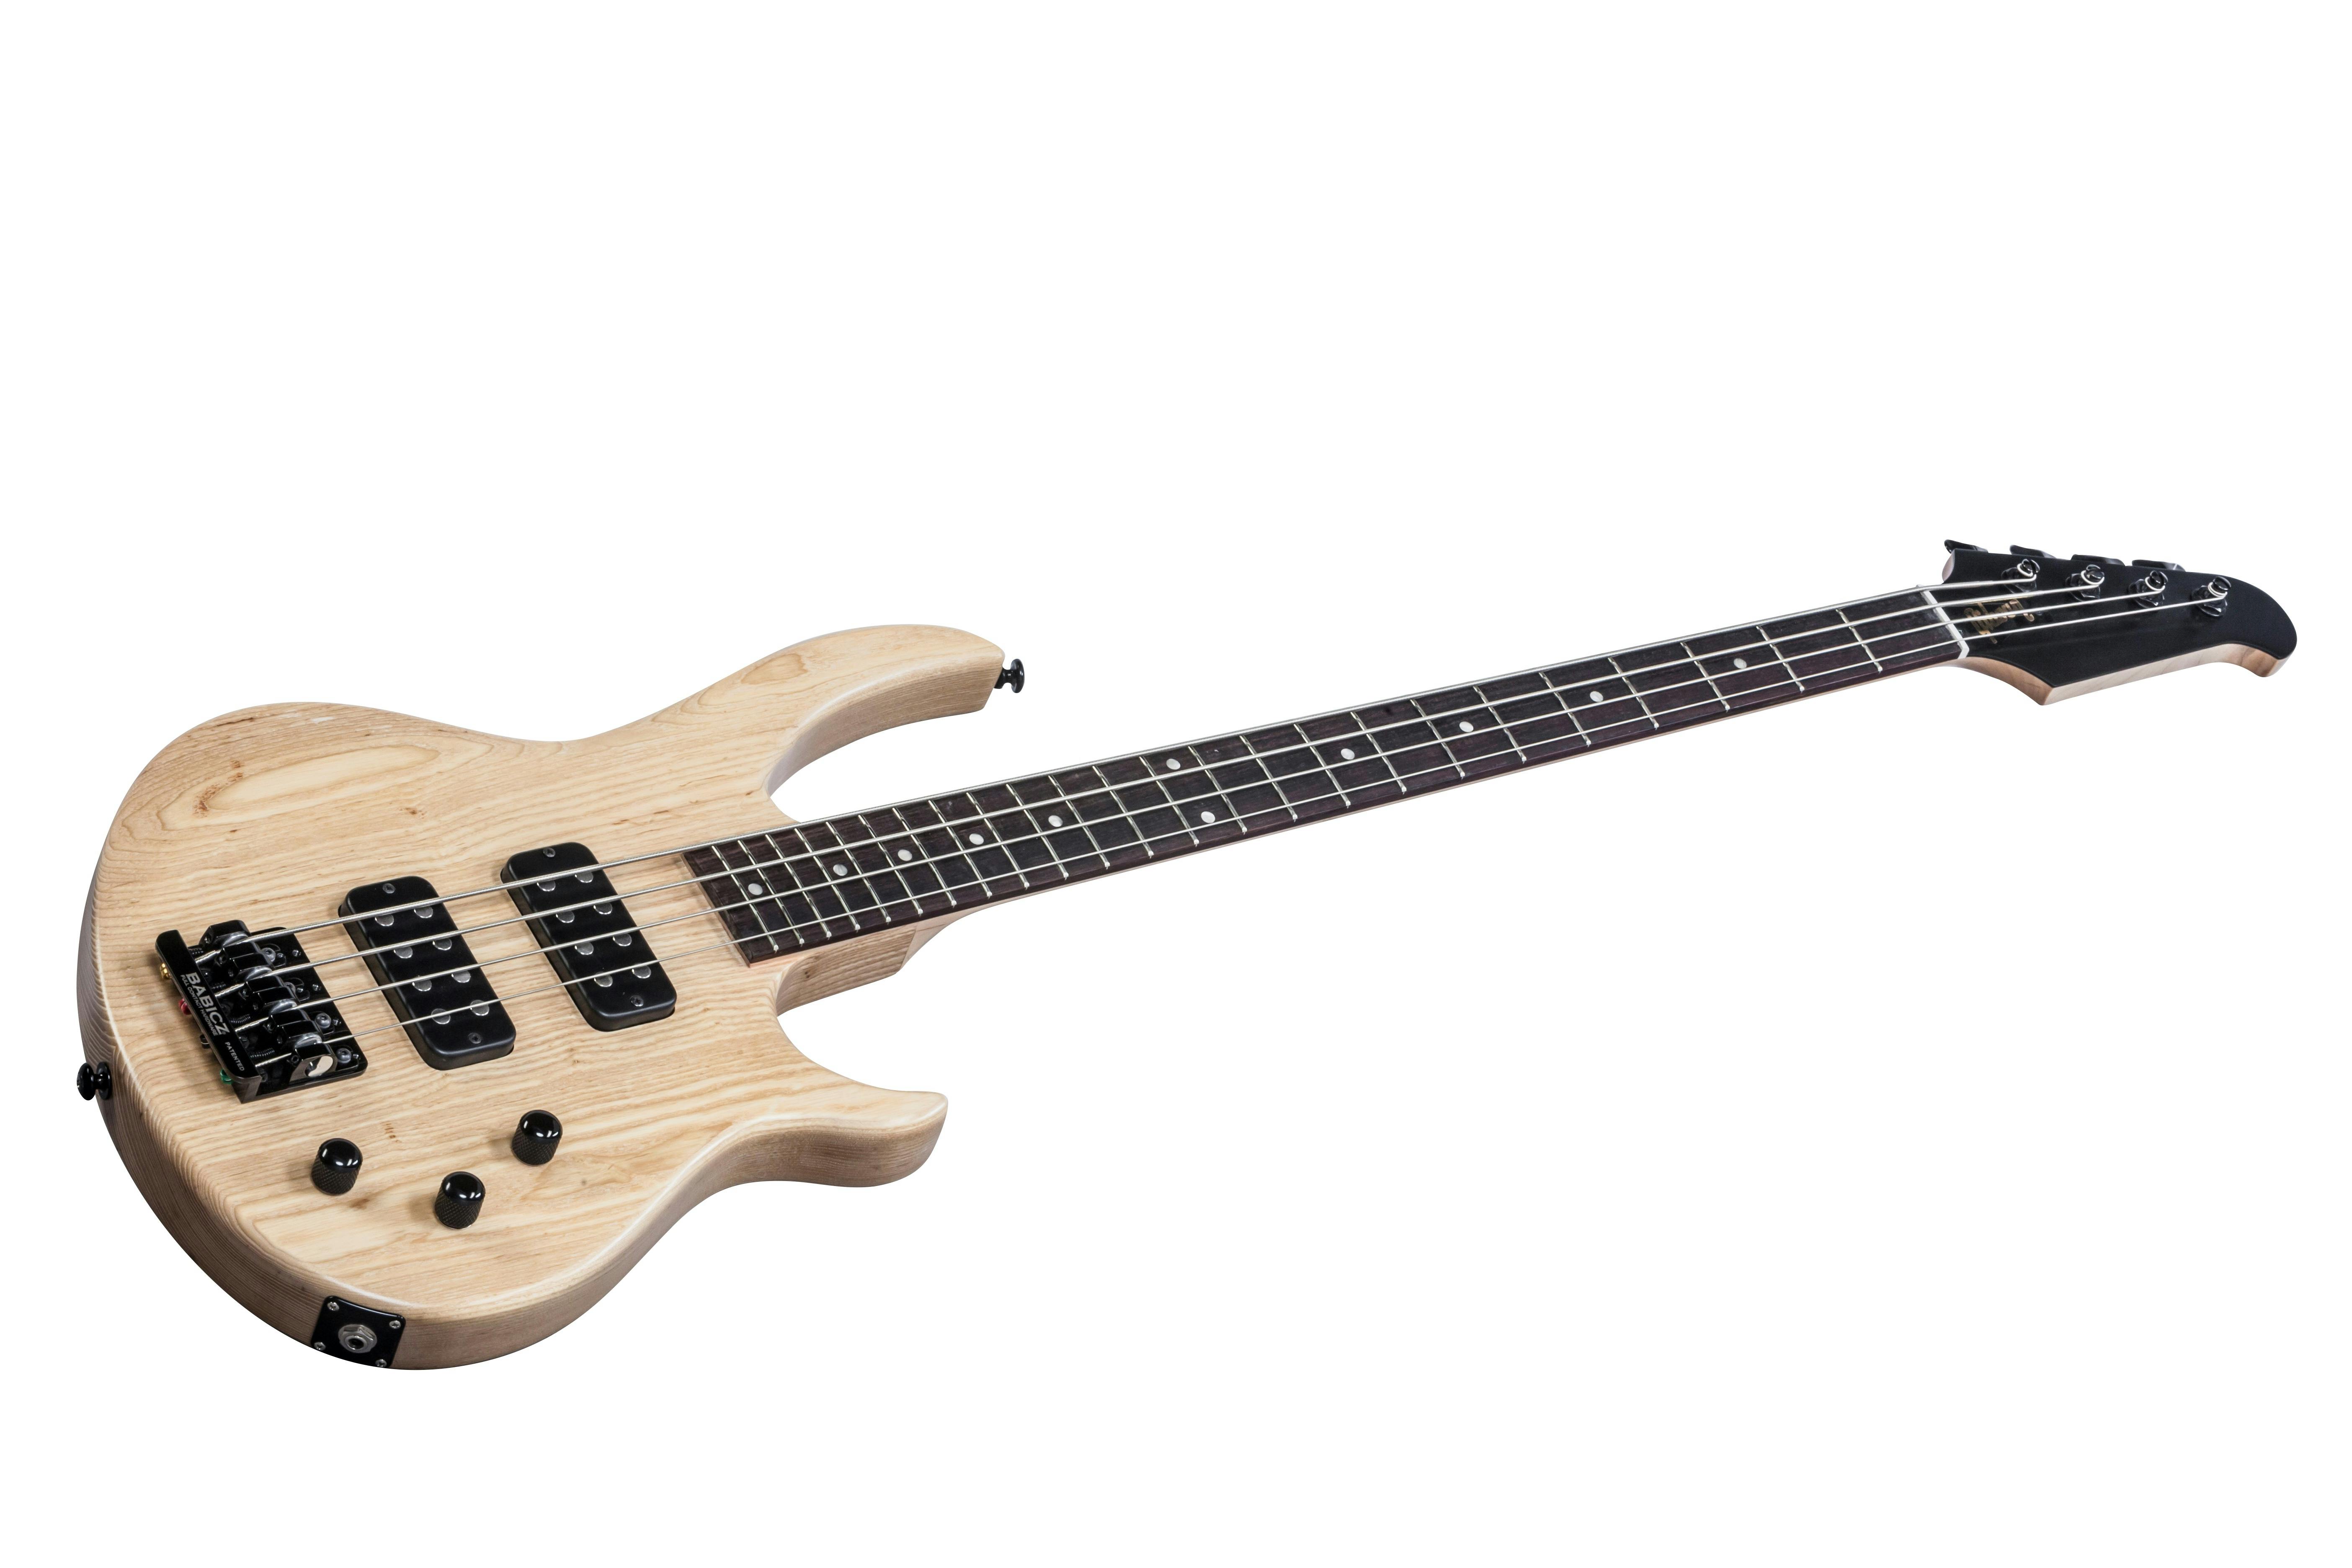 Gibson EB Bass 4-String - Zikinf